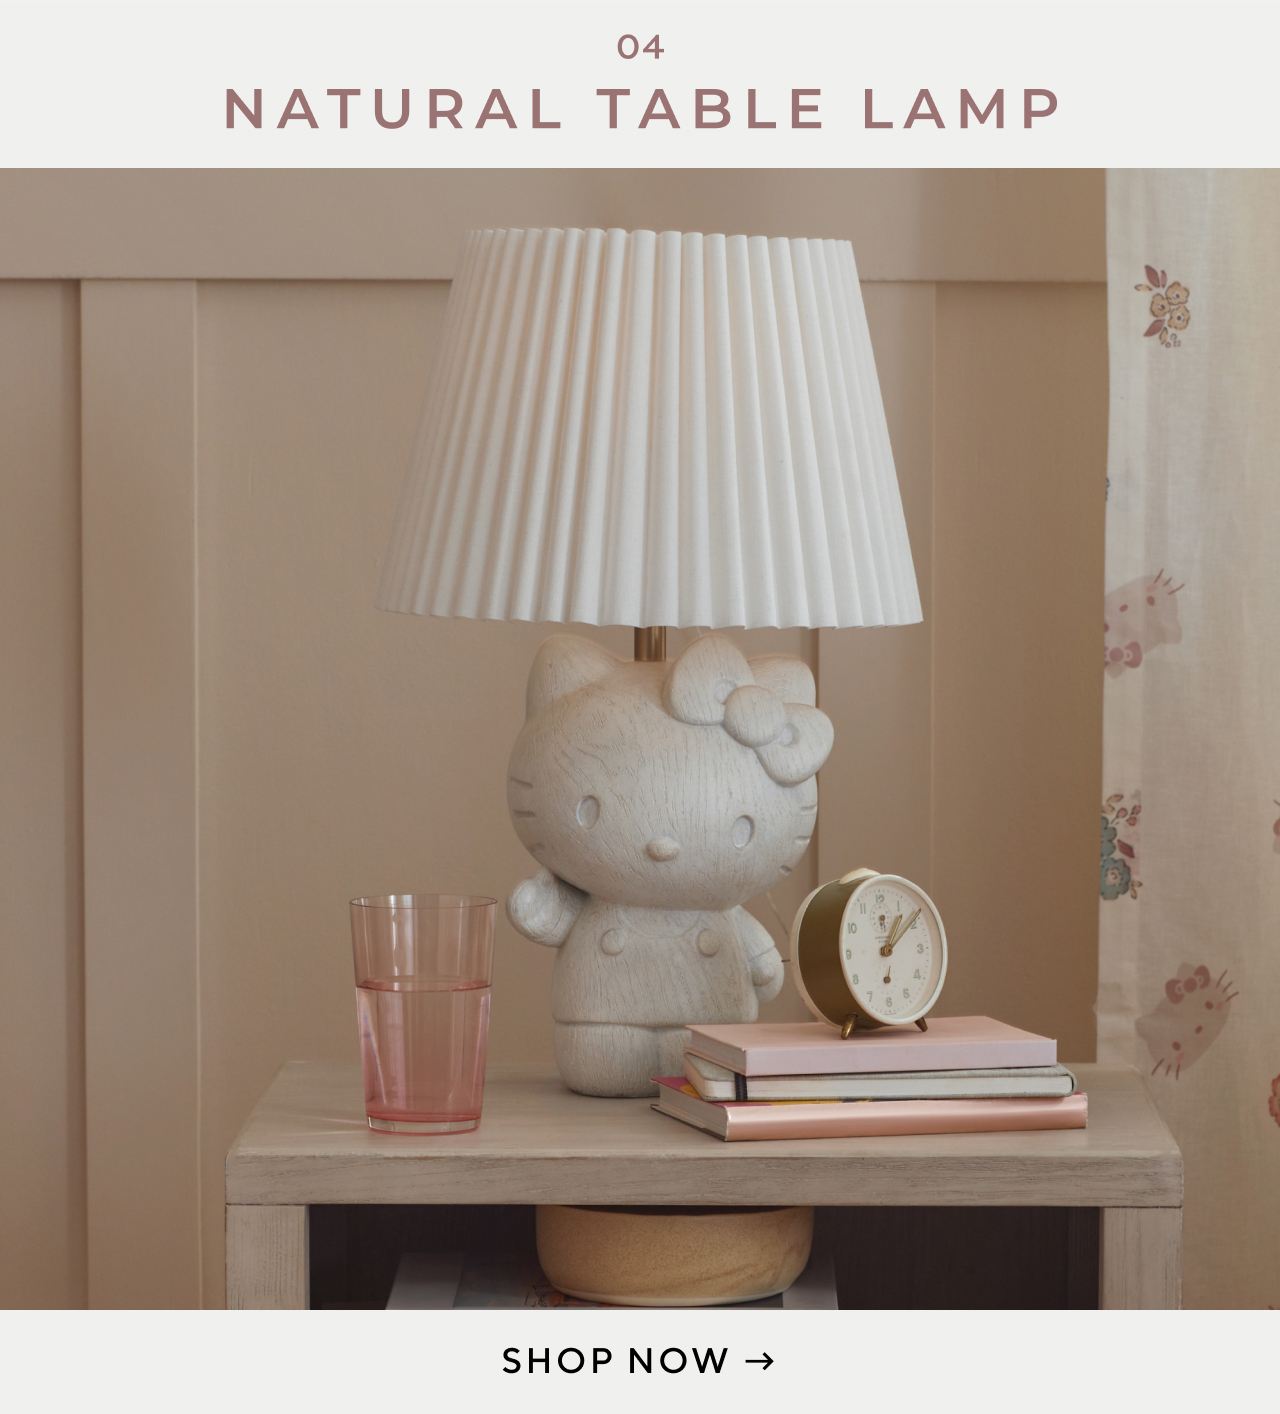 Natural table lamp